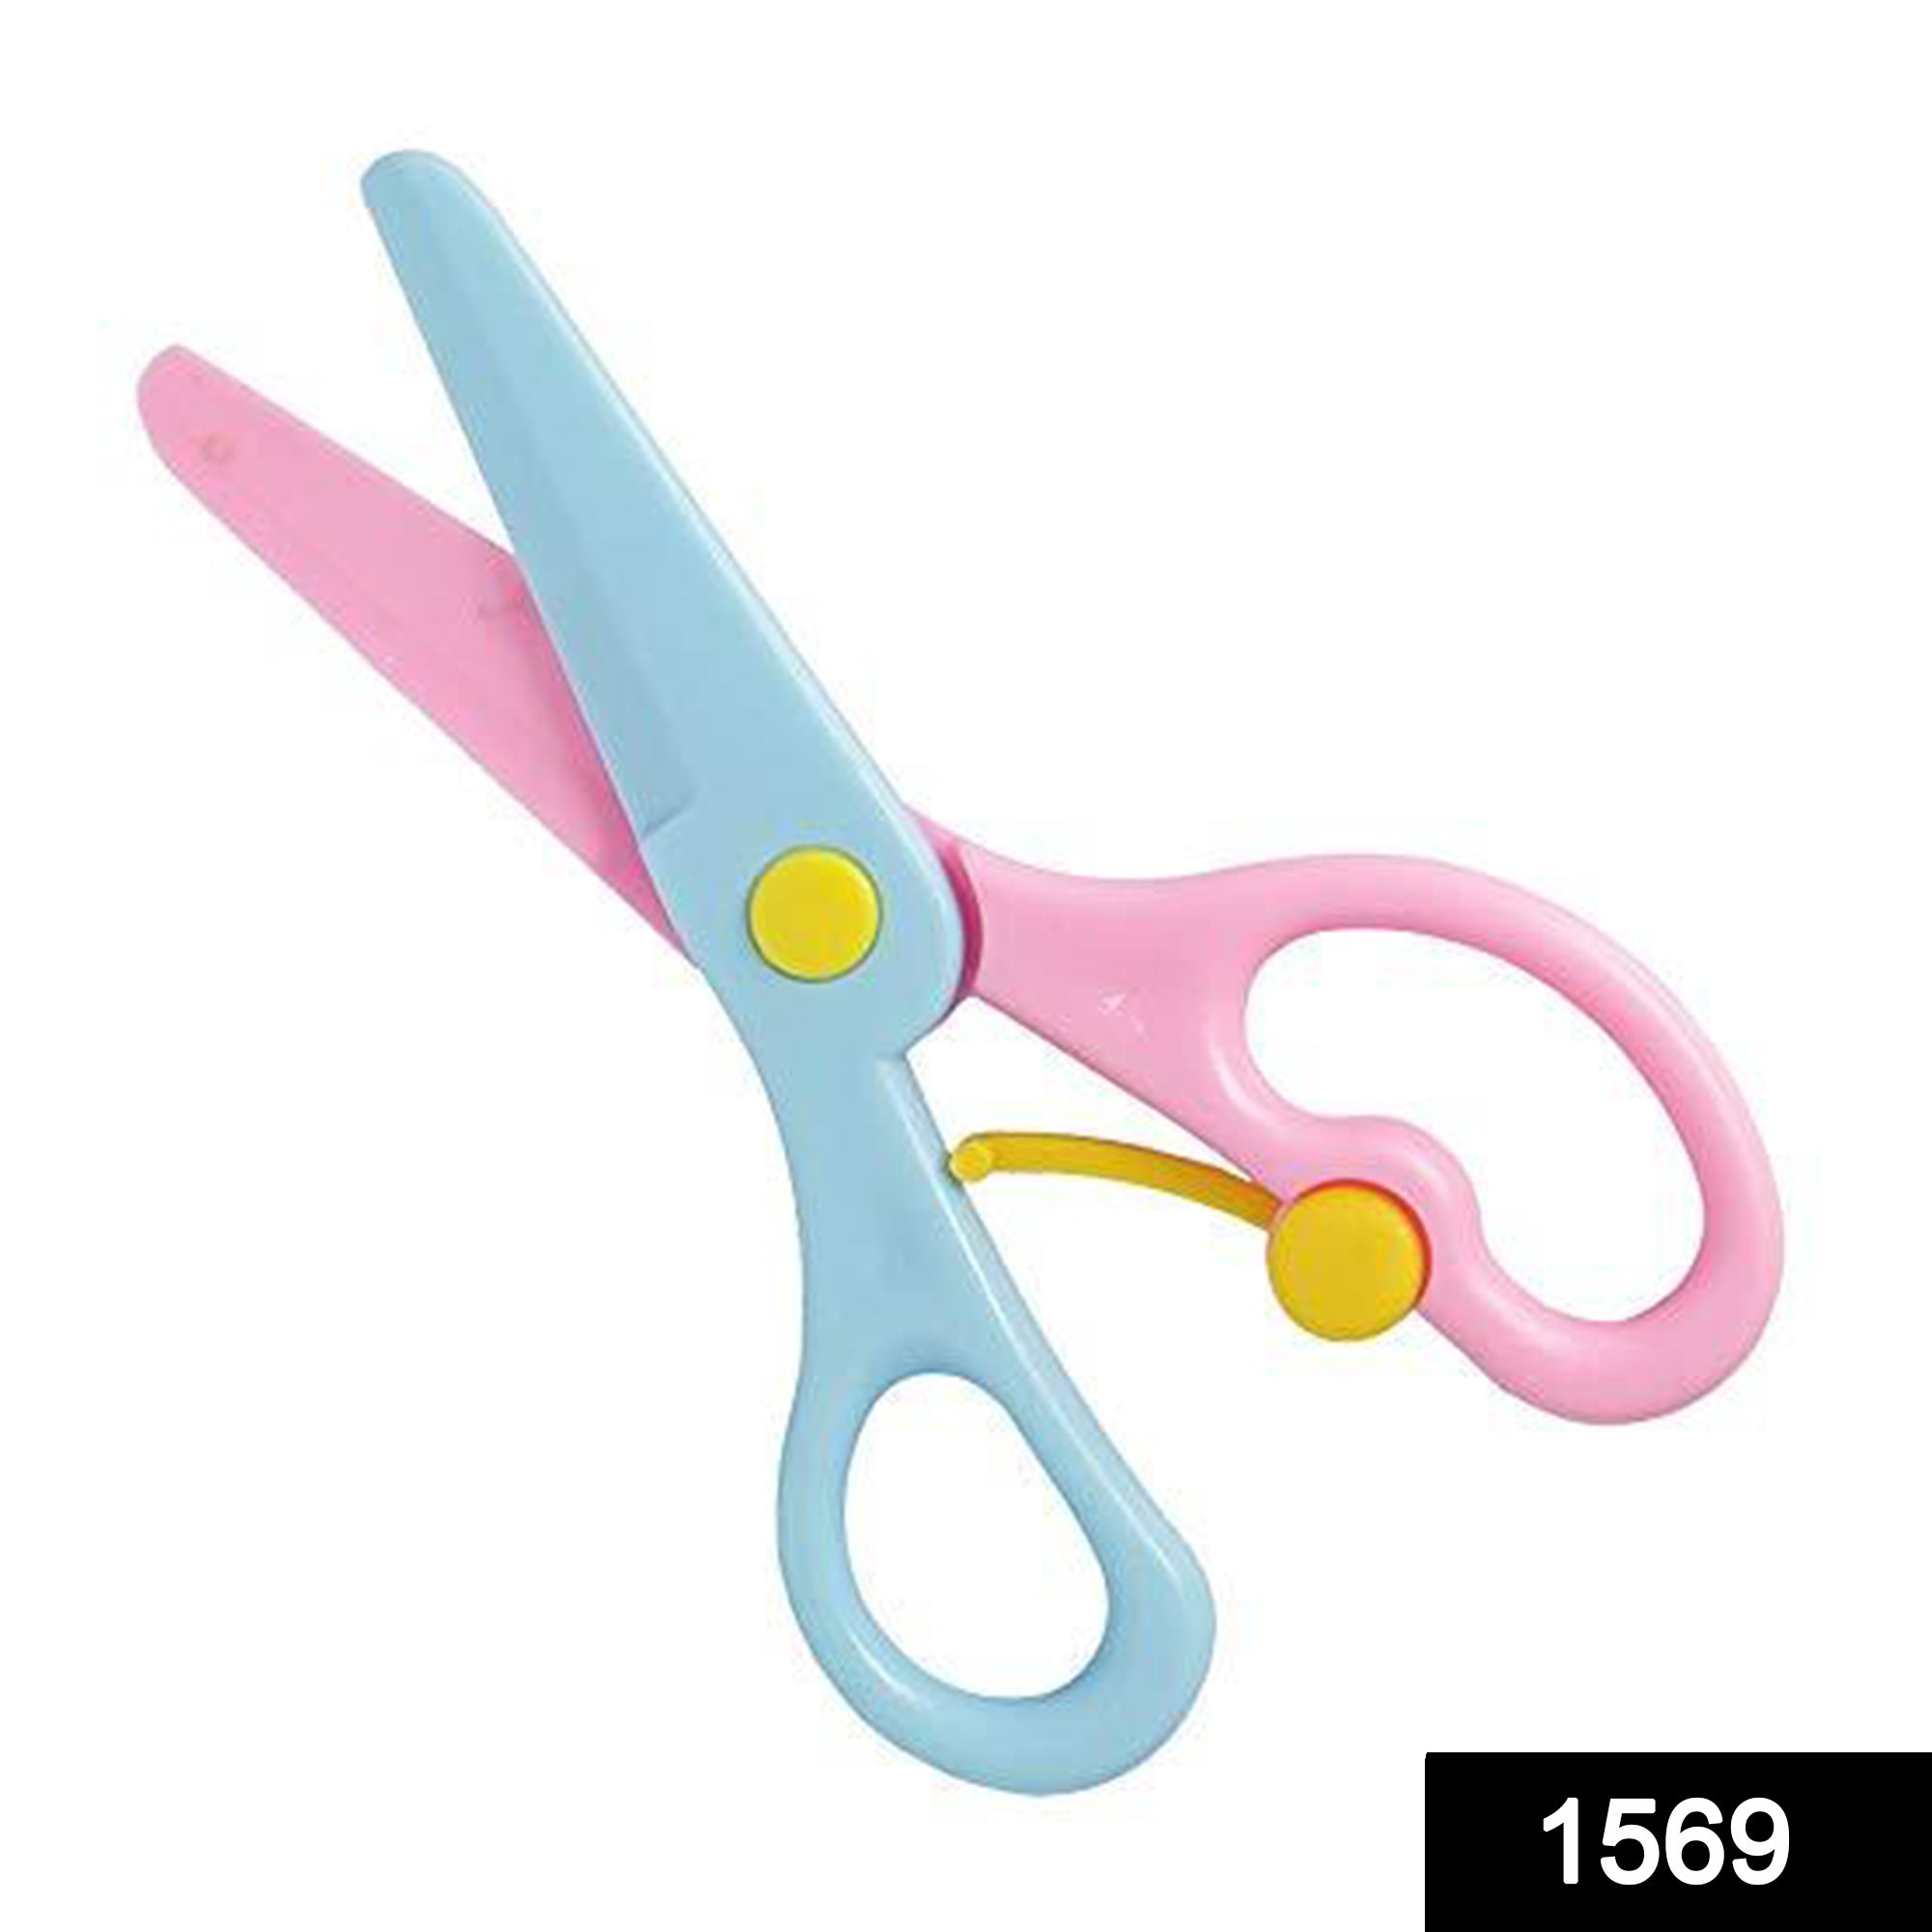 1569 Kids Handmade Plastic Safety Scissors Safety Scissors DeoDap